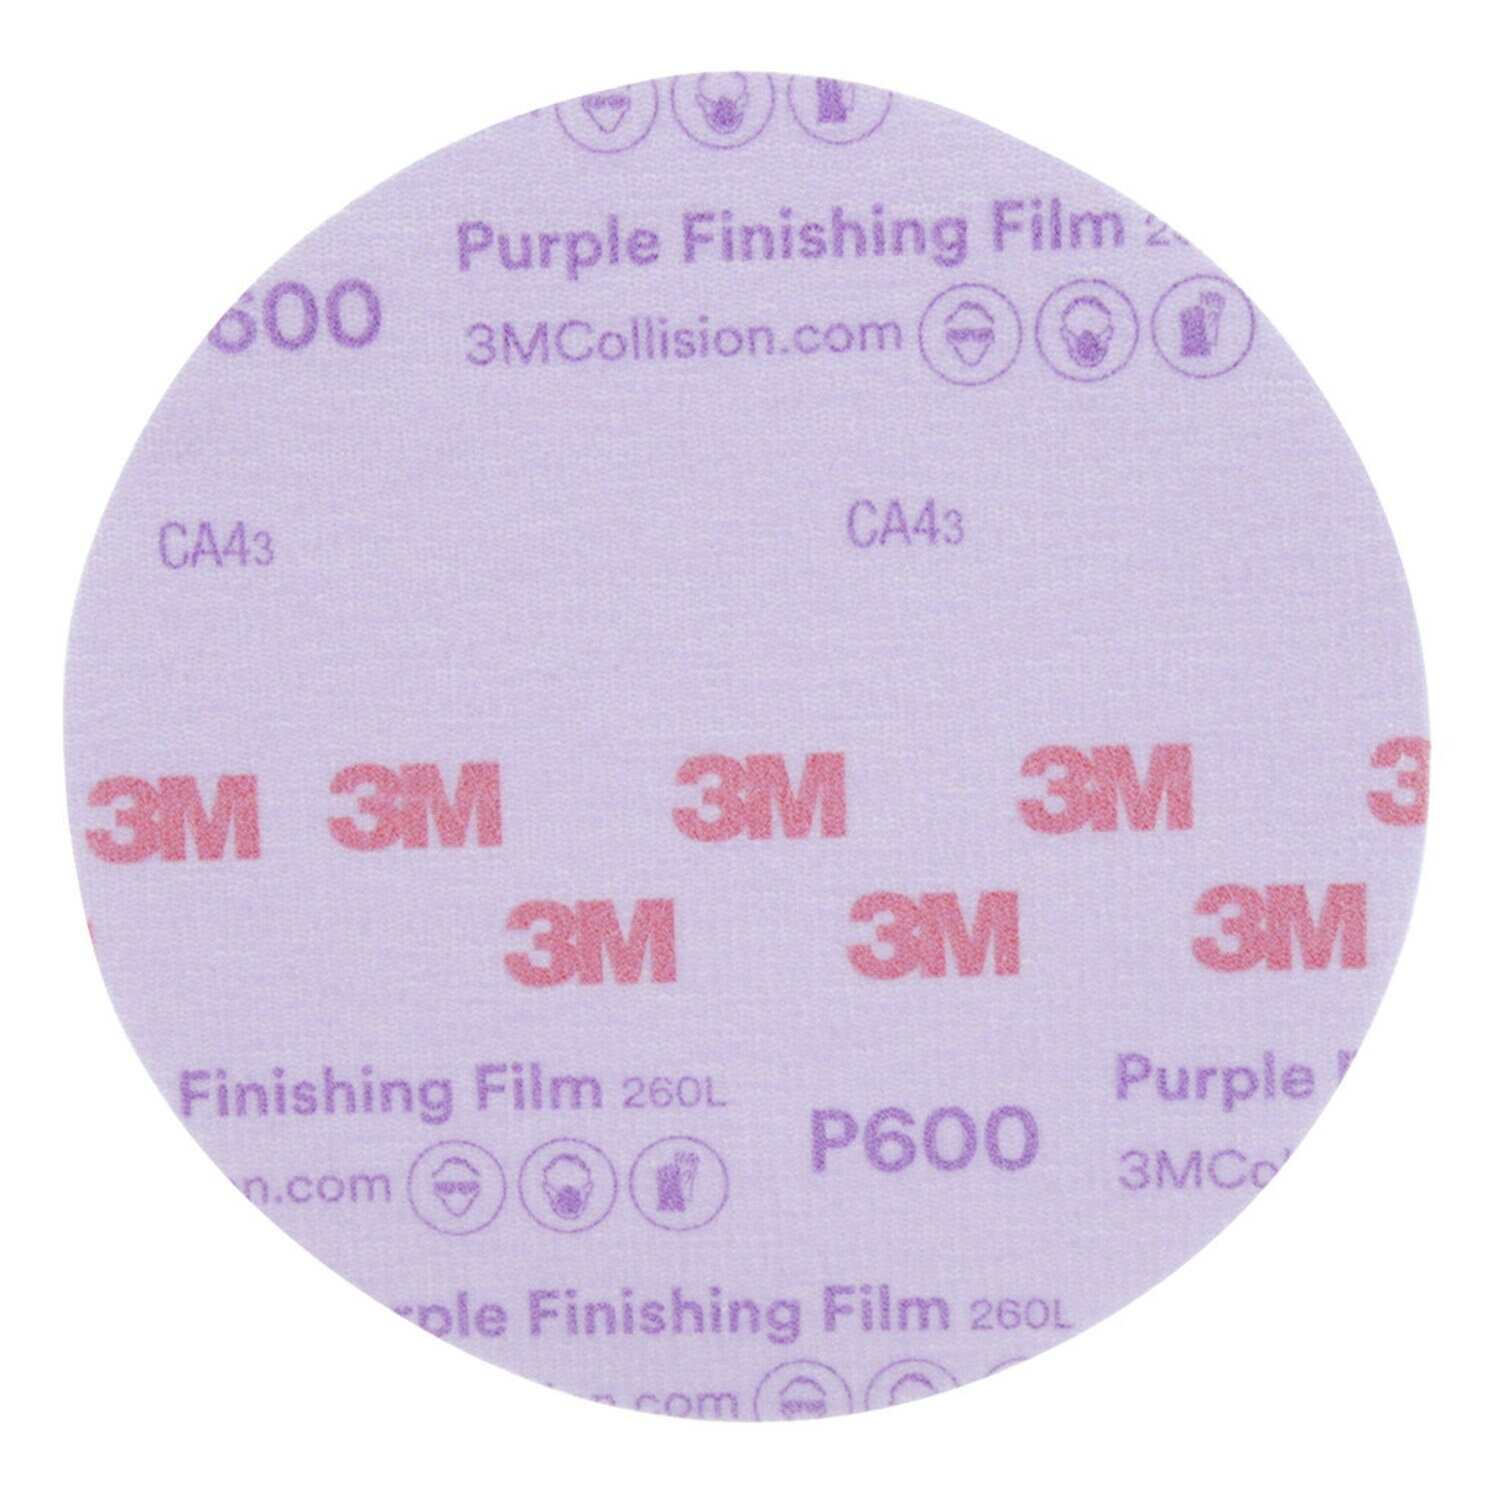 7100122789 - 3M Hookit Purple Finishing Film Abrasive Disc 260L, 30671, 6 in, P600,
50 discs per carton, 4 cartons per case